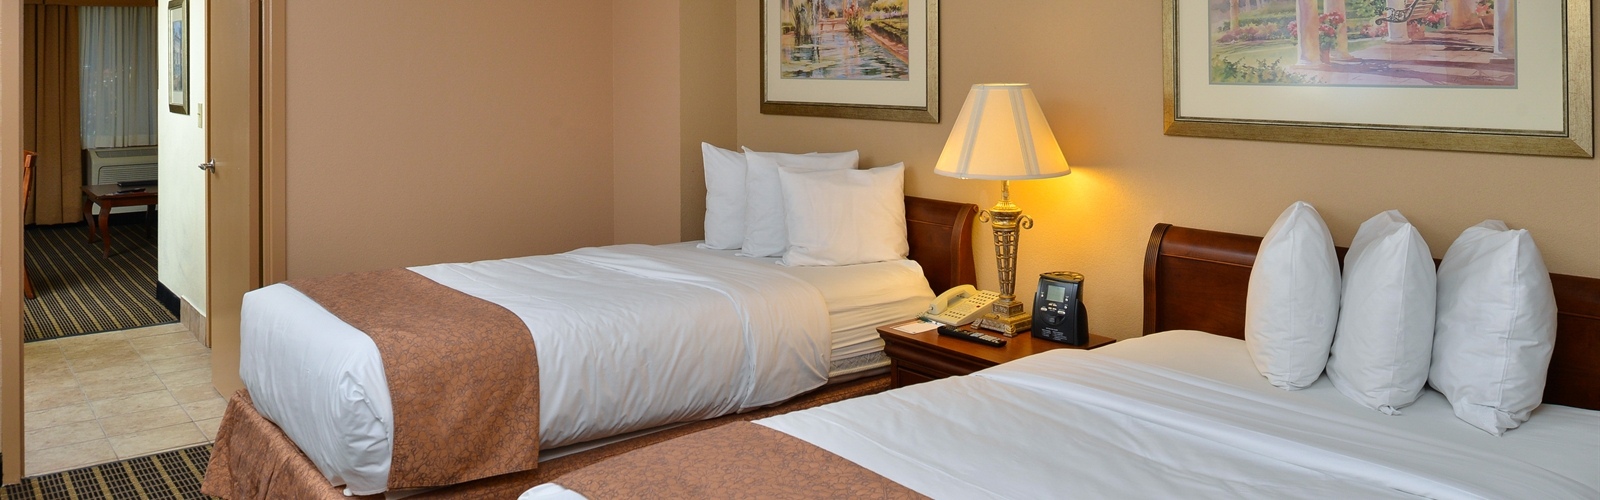 2 bedroom suites near disney world florida